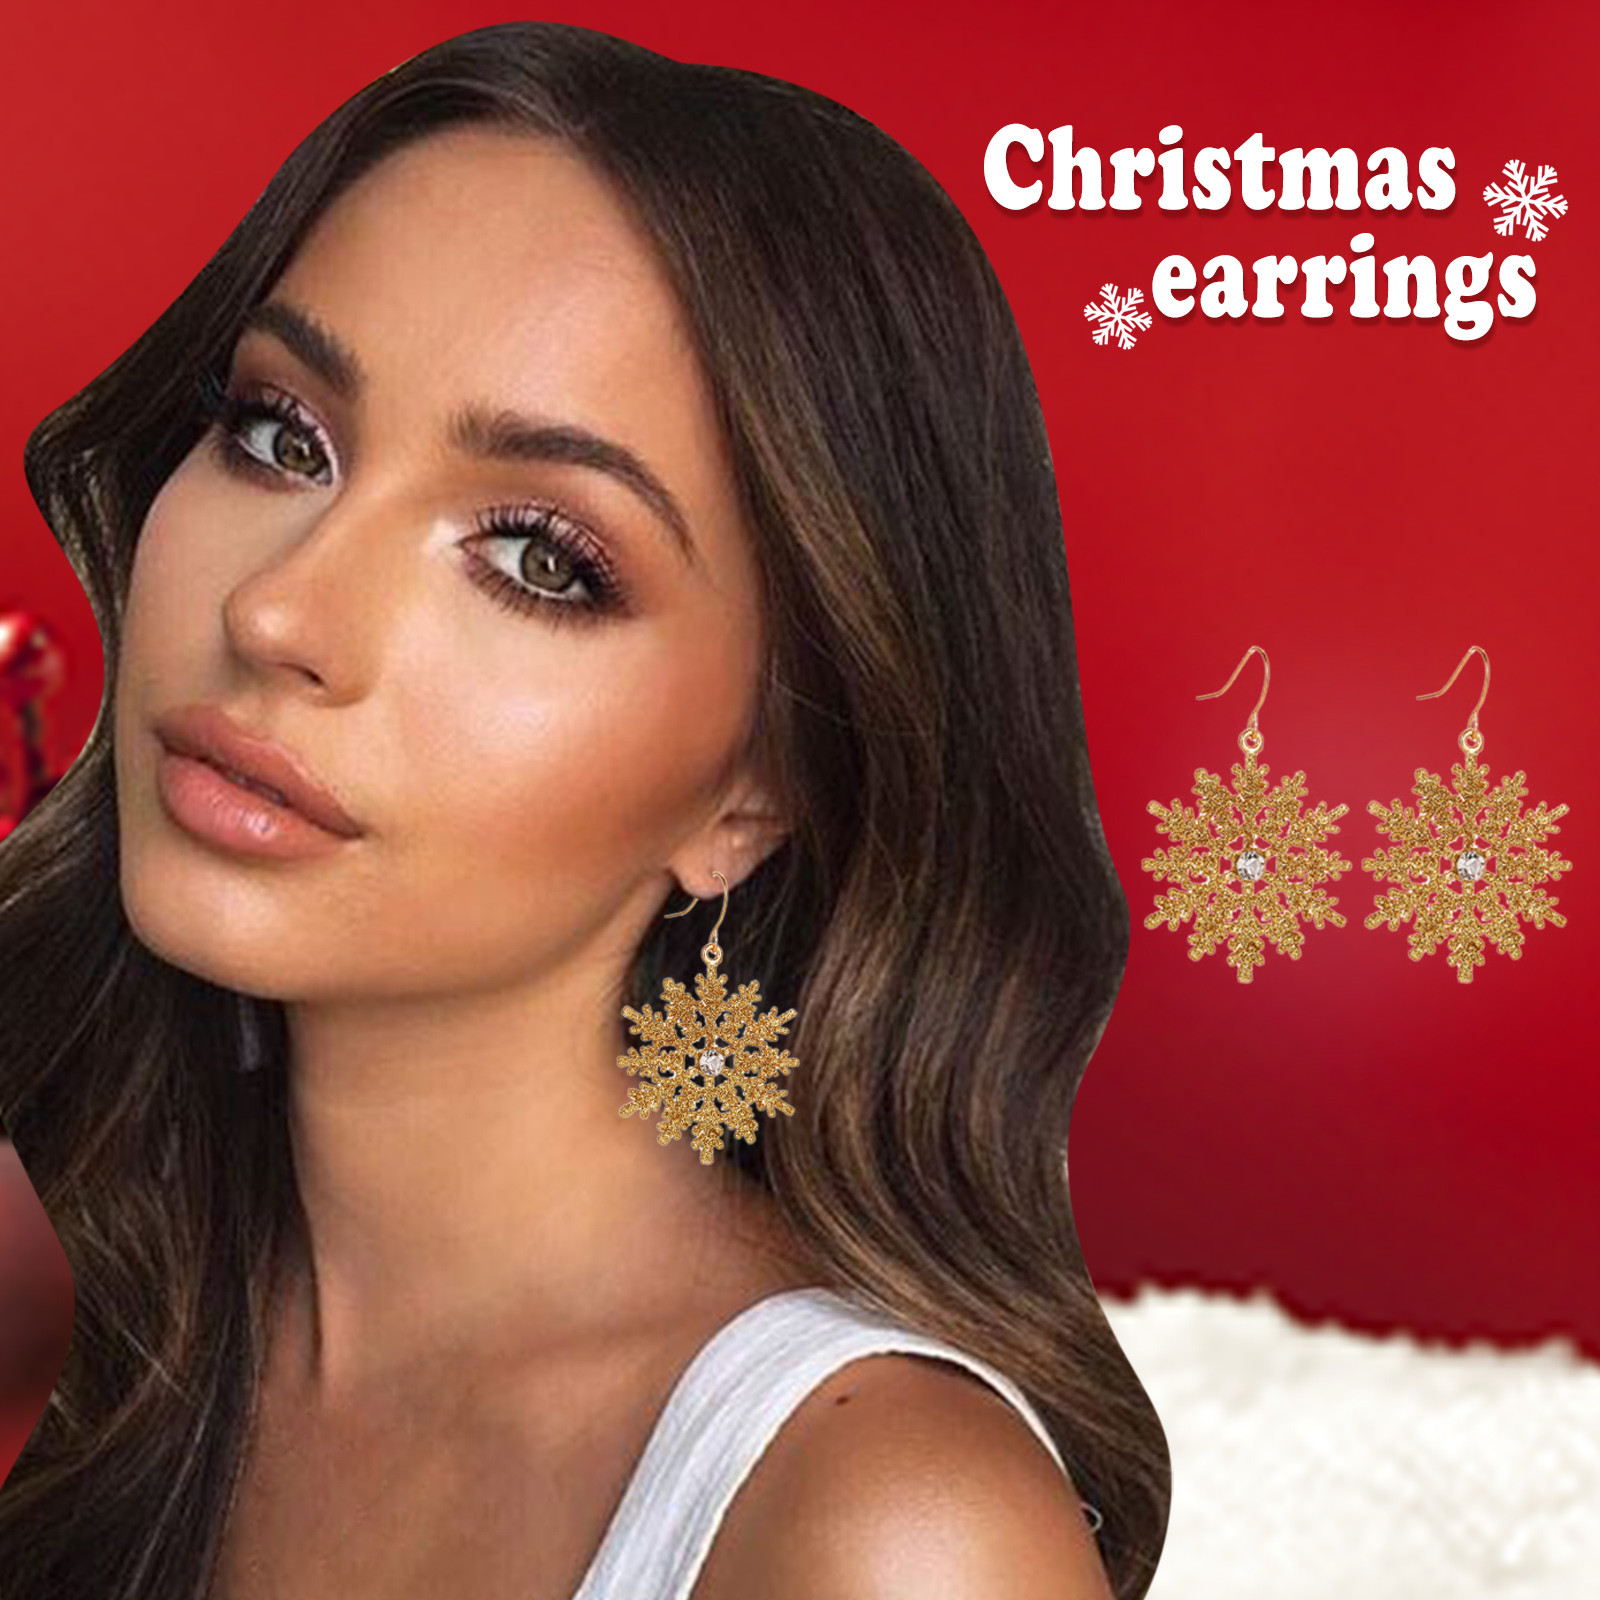 Kayannuo Christmas Clearance Women Fashion Earrings Christmas Earrings Cute Festive Jewelry Ear Wrap Christmas Gifts For Women - image 1 of 4